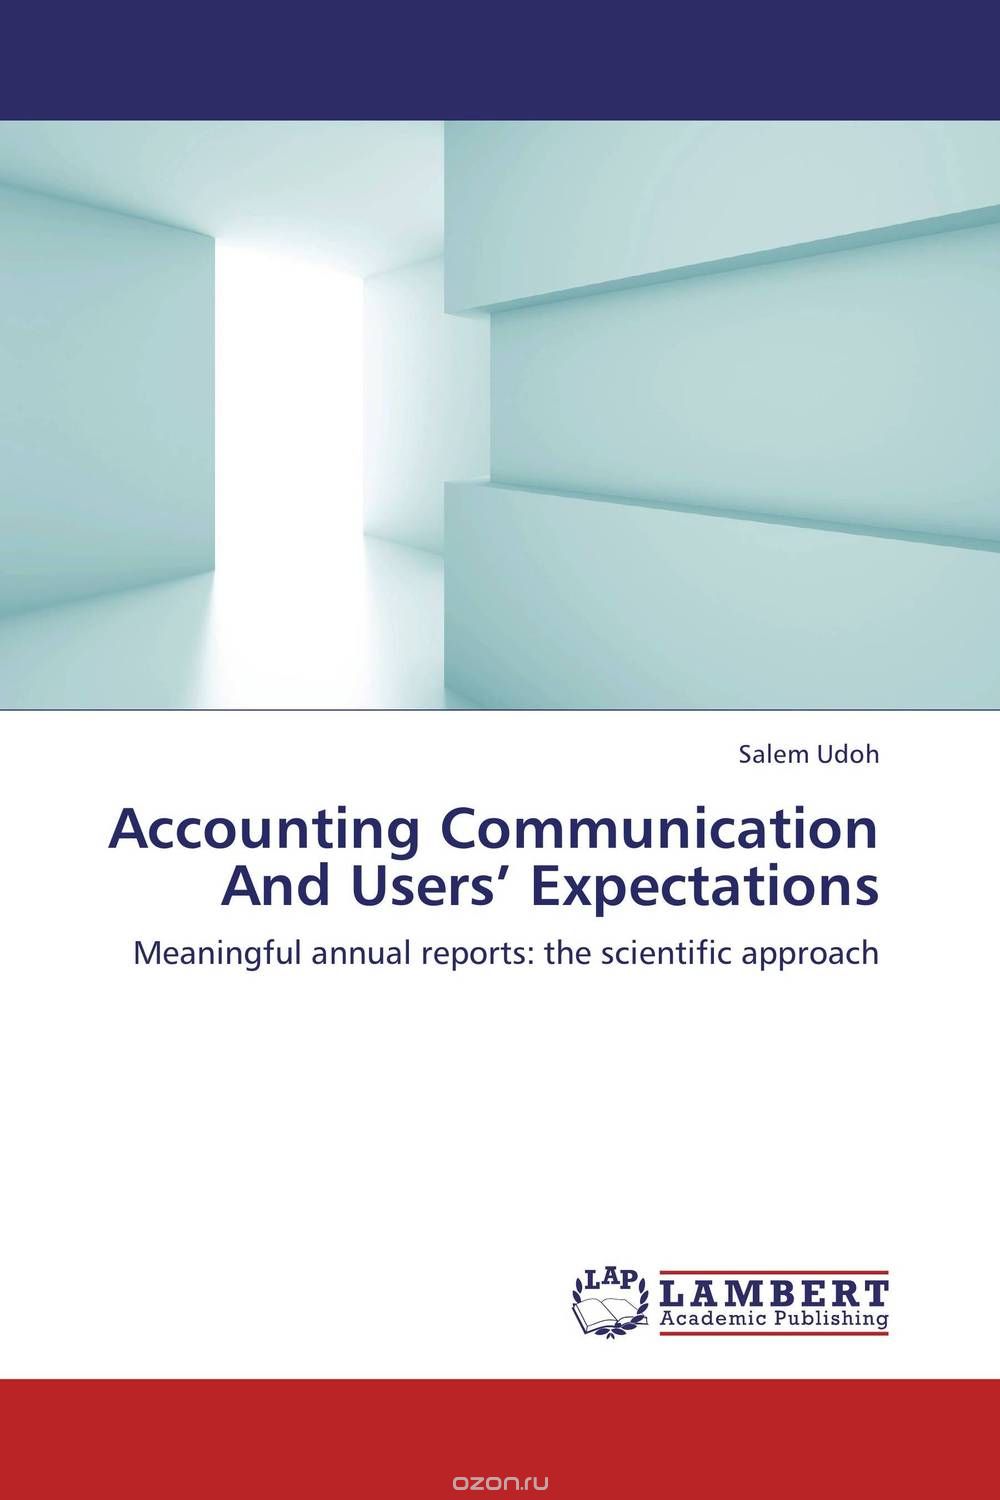 Скачать книгу "Accounting Communication And Users’ Expectations"